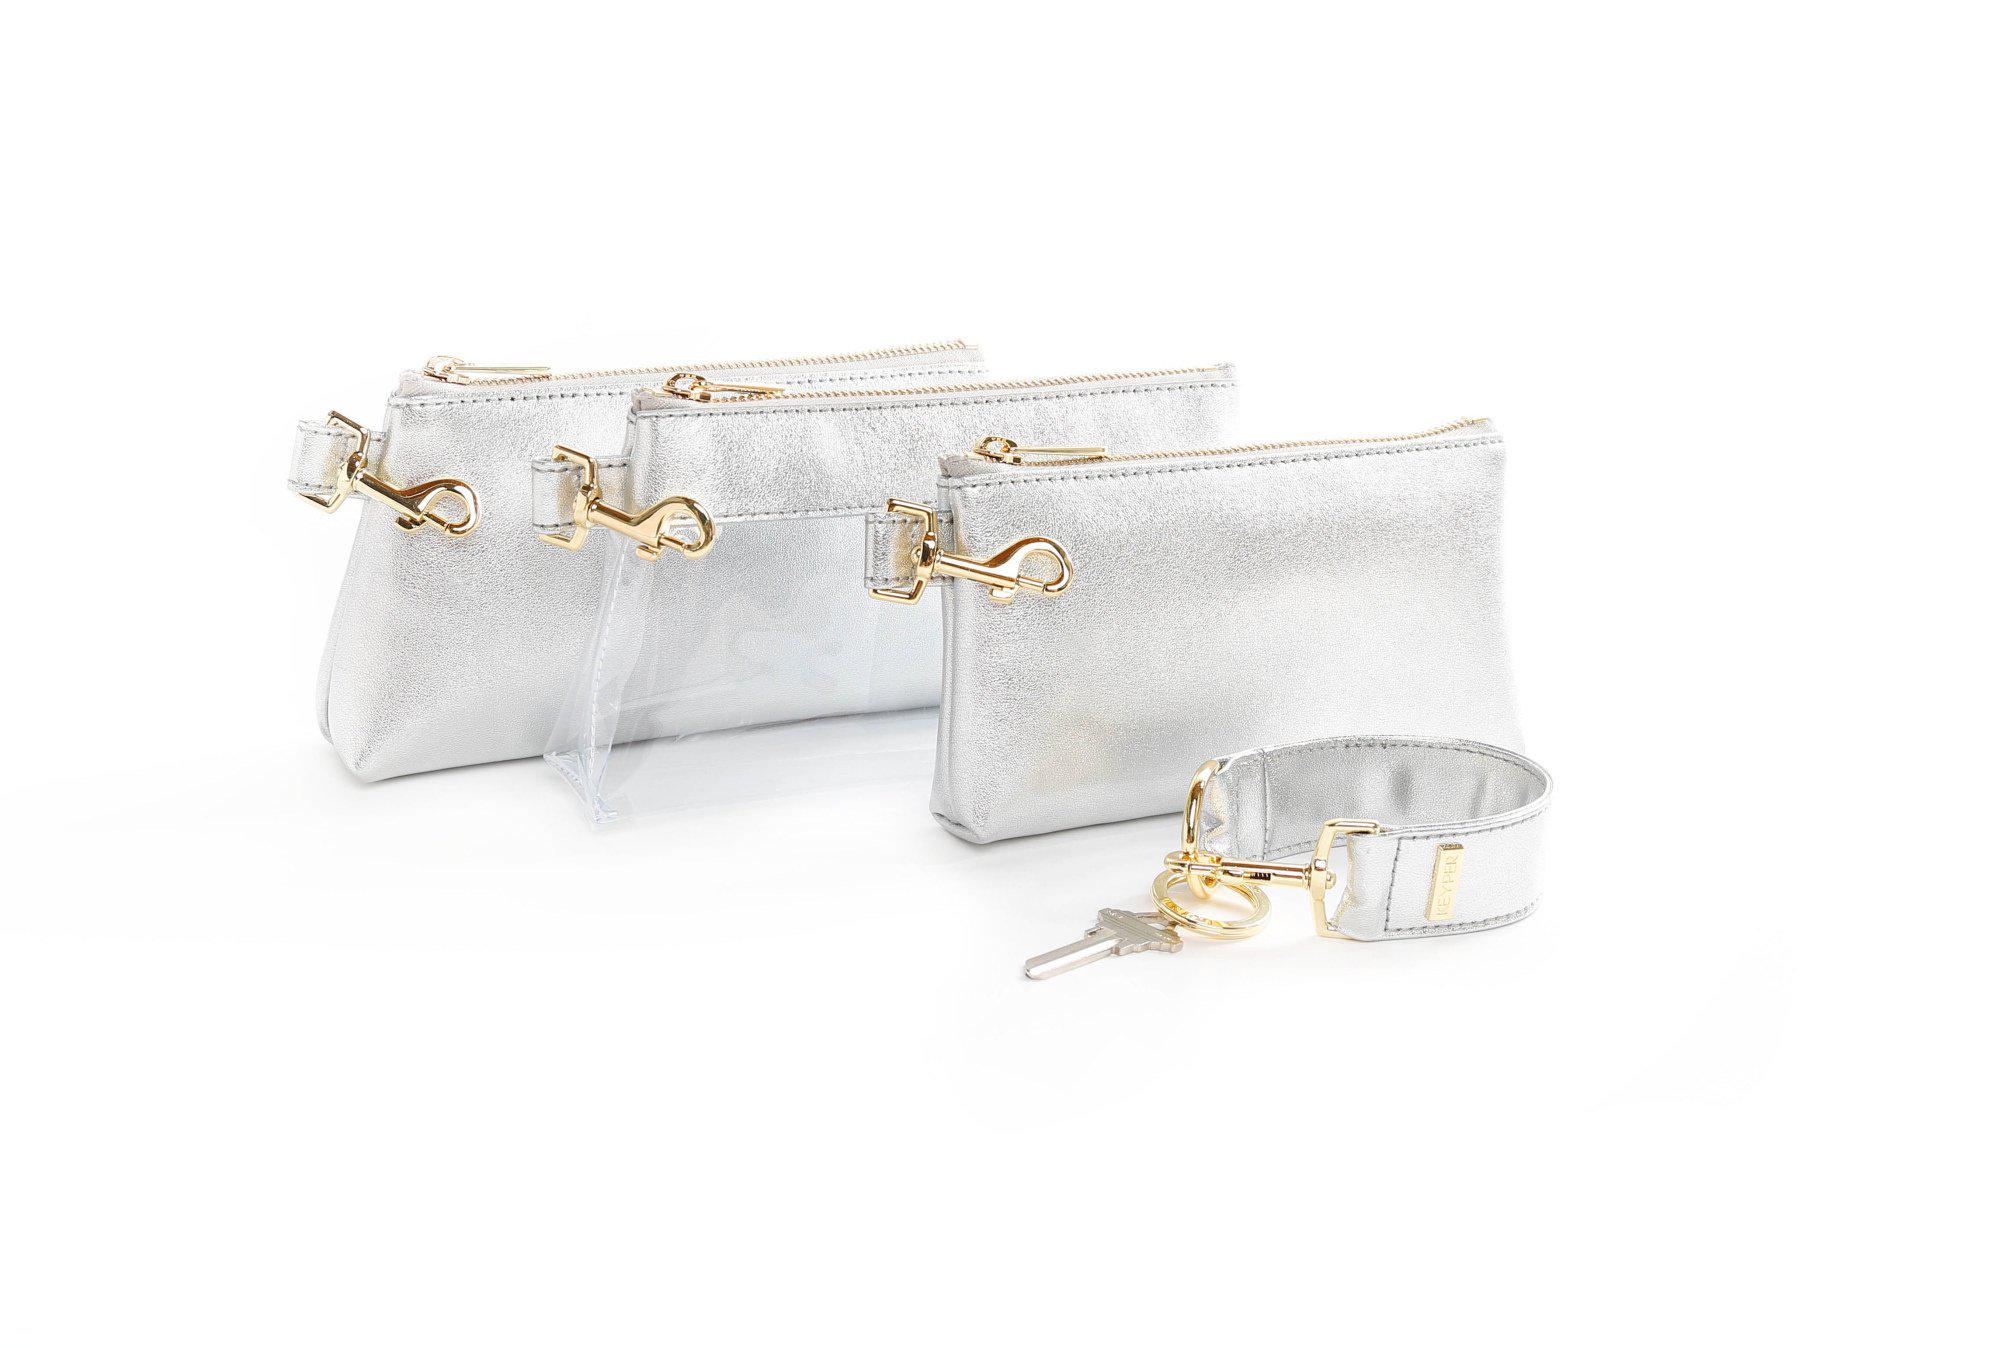 Buy Peora Clutch Womens Purse Bridal Bag for Detachable Strap Evening Sling  Bag - Silver-C67S Online